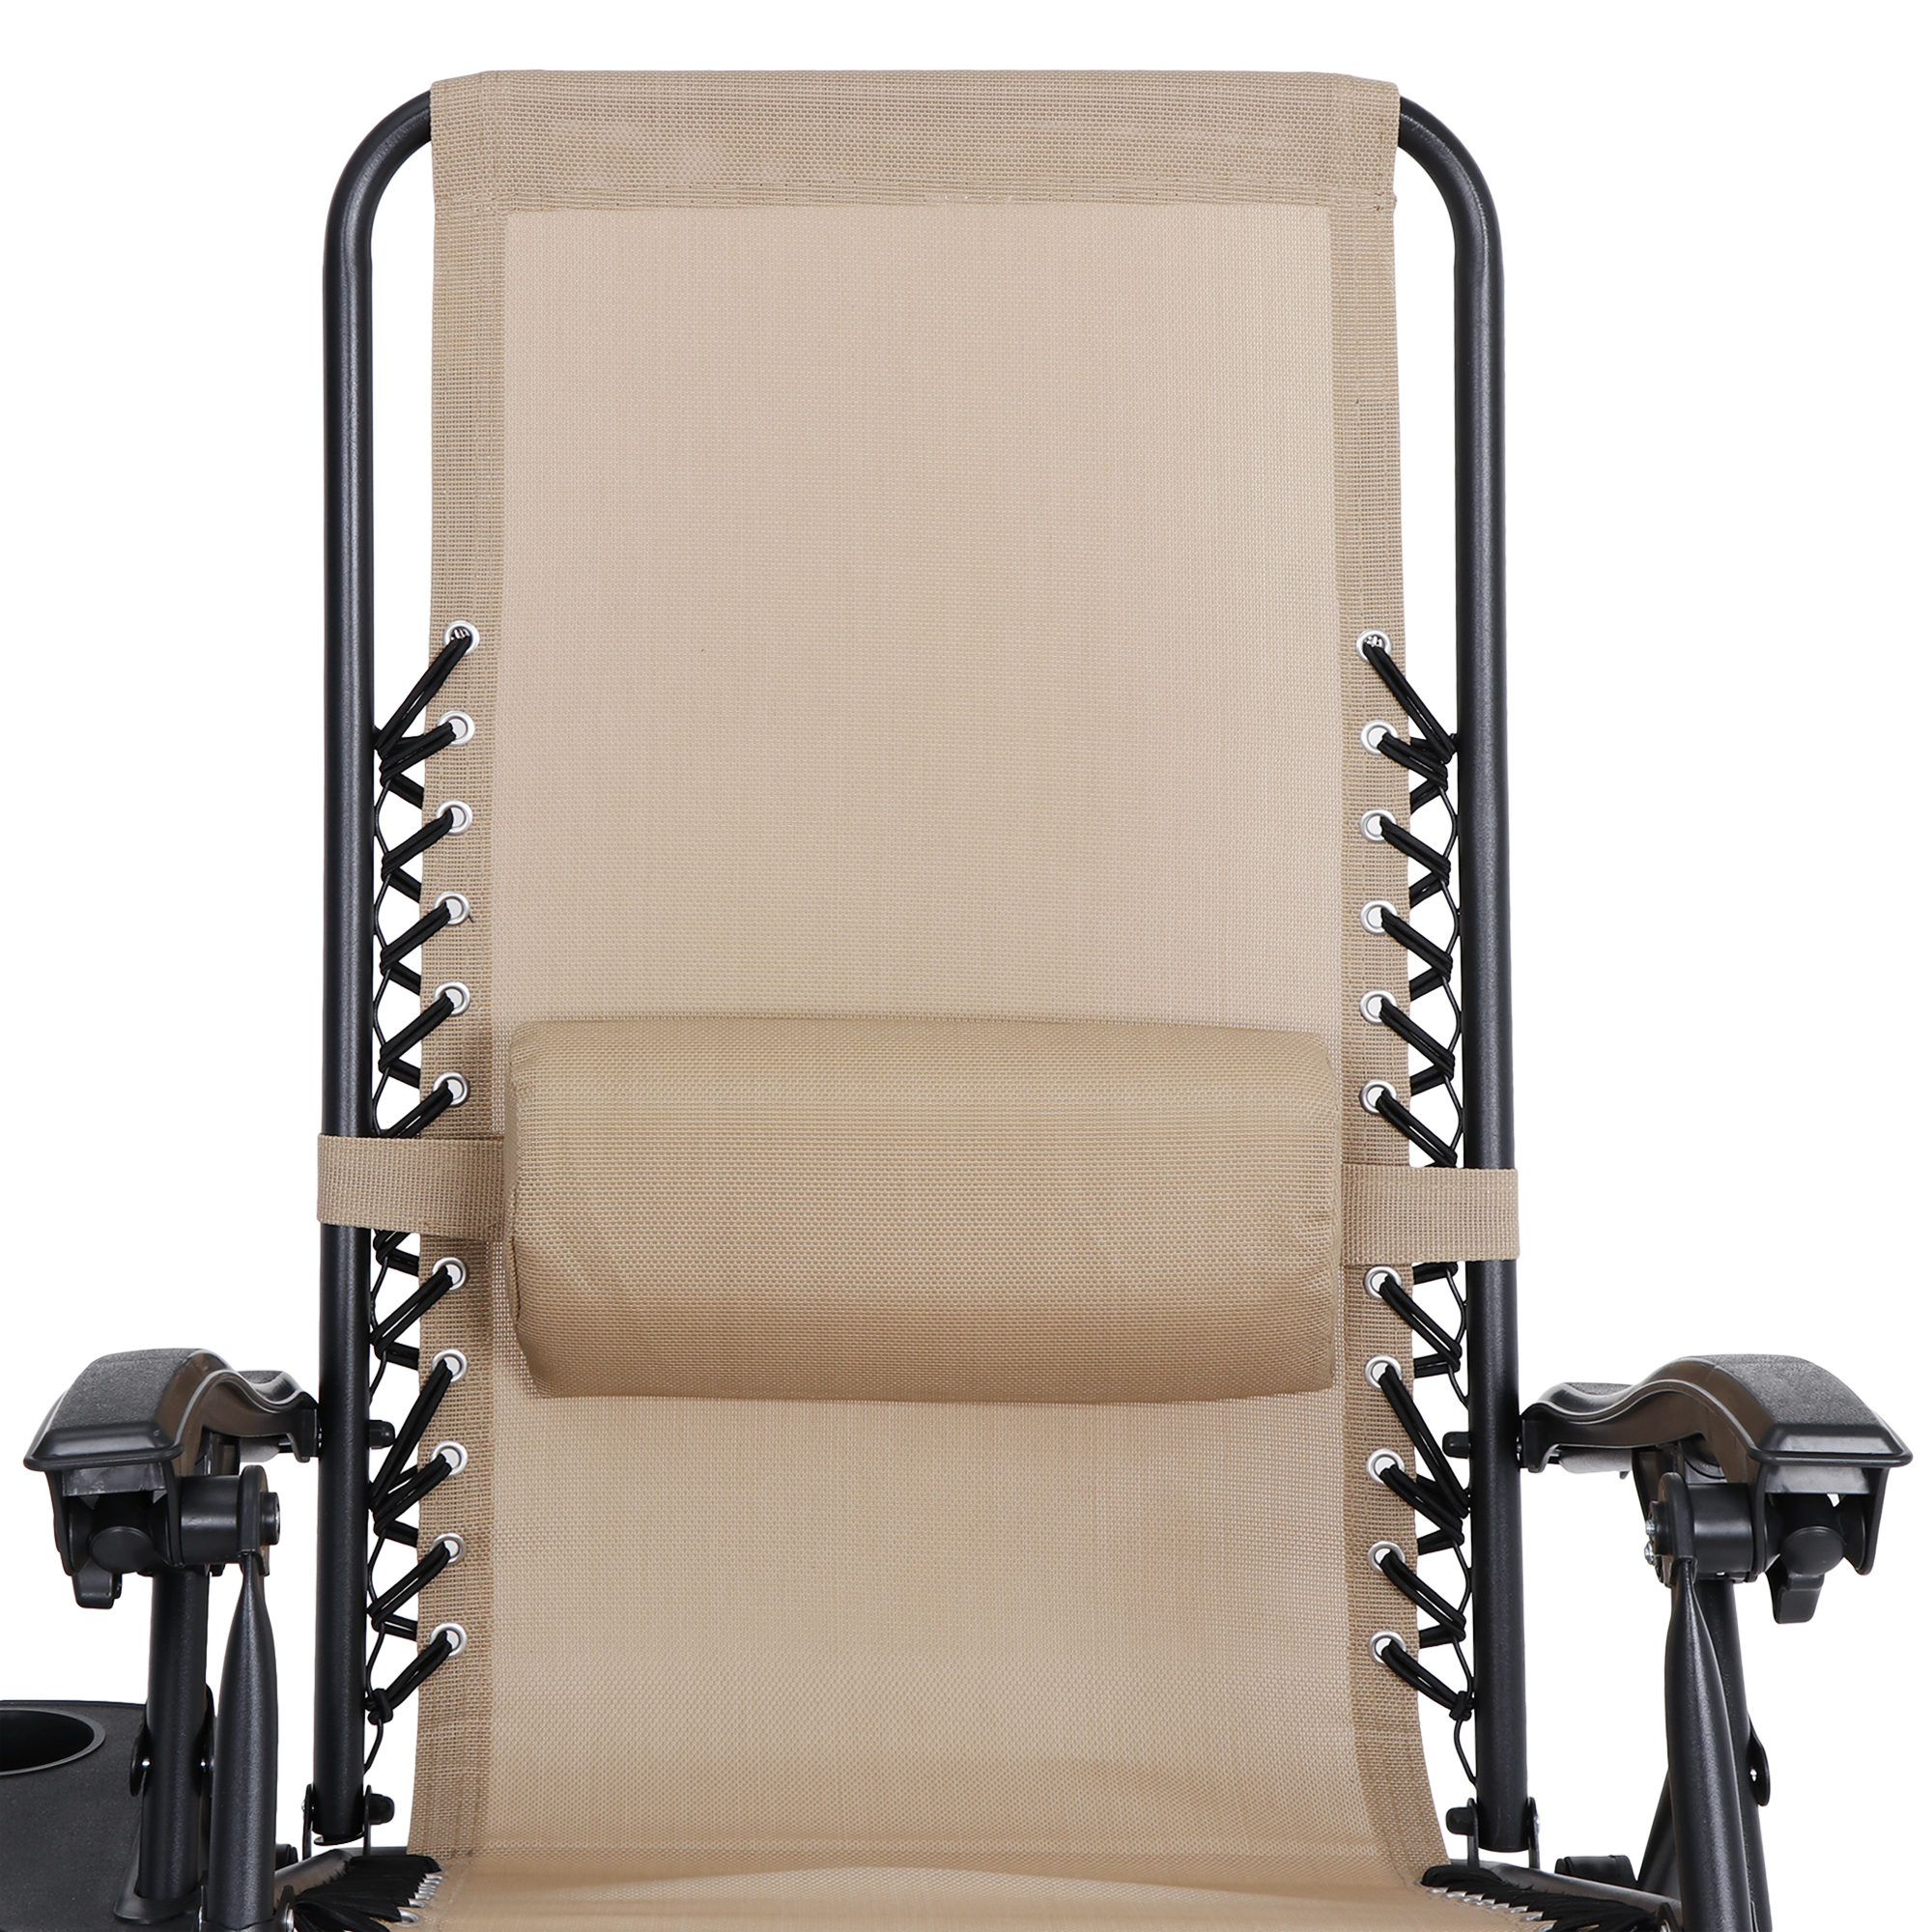 ZENSTYLE Set of 2 Adjustable Recline Chairs Zero Gravity Patio Beach Lounge 330LBS W/ Cup Holders Beige - image 5 of 9